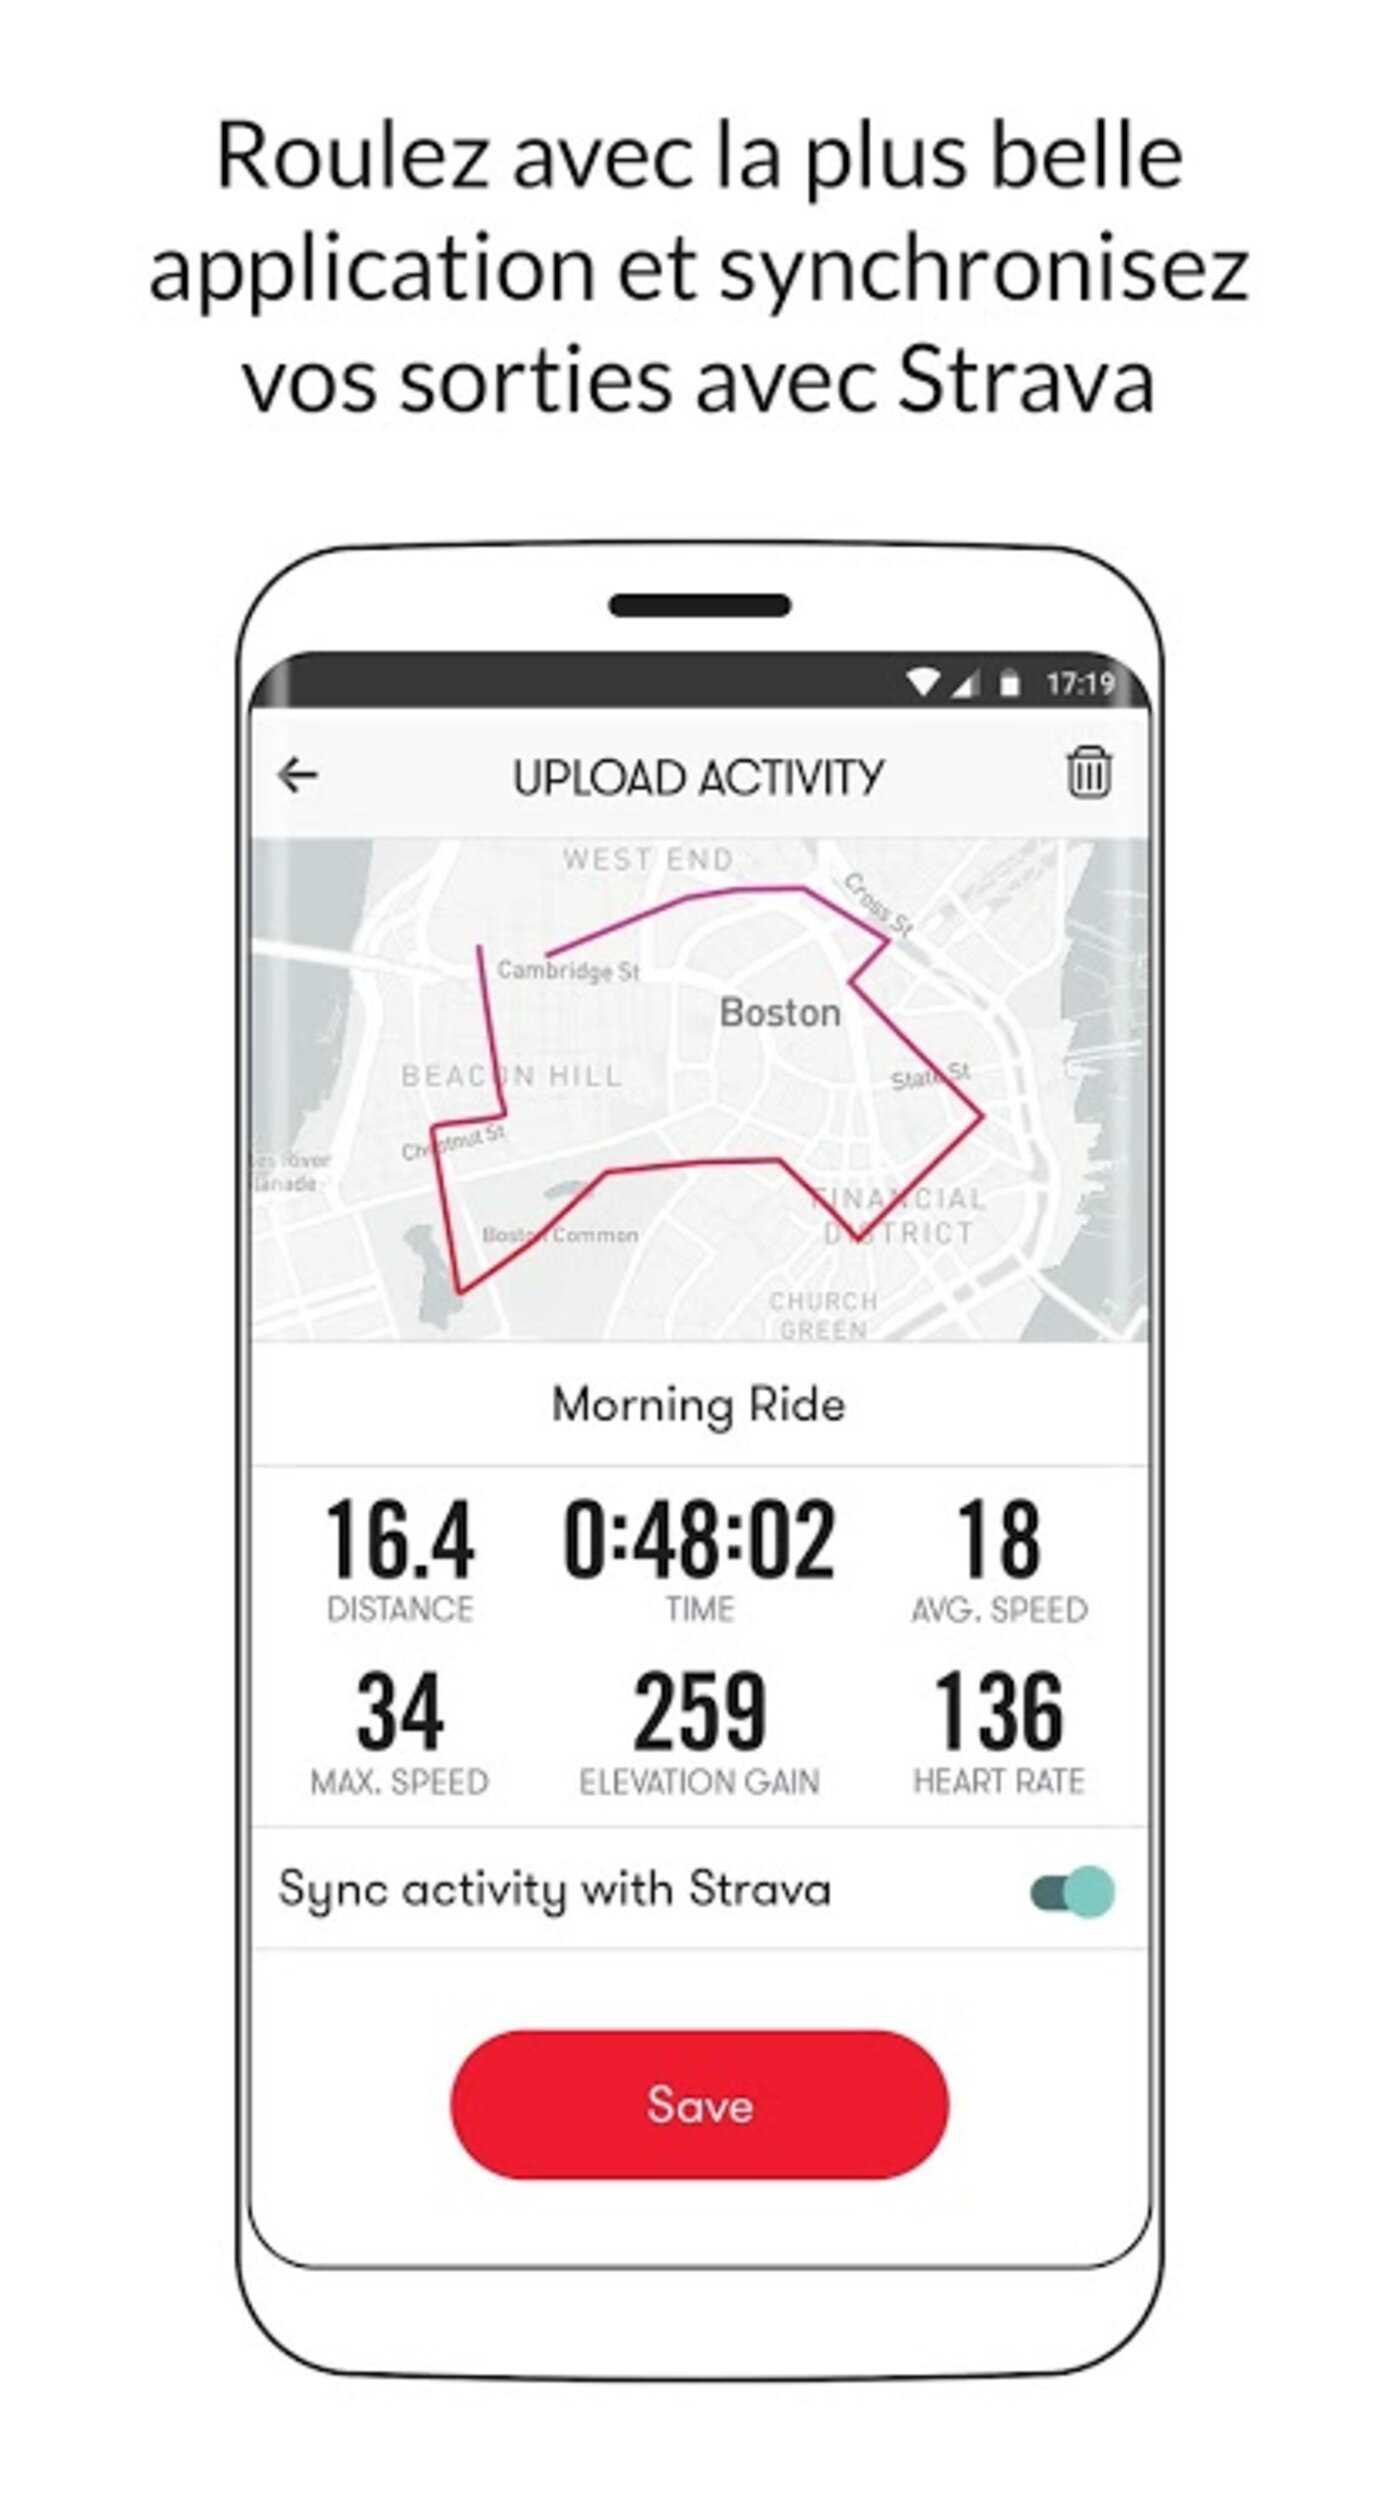 Bike Computer – Your Personal Cycling Tracker v1.8 (Premium) APK